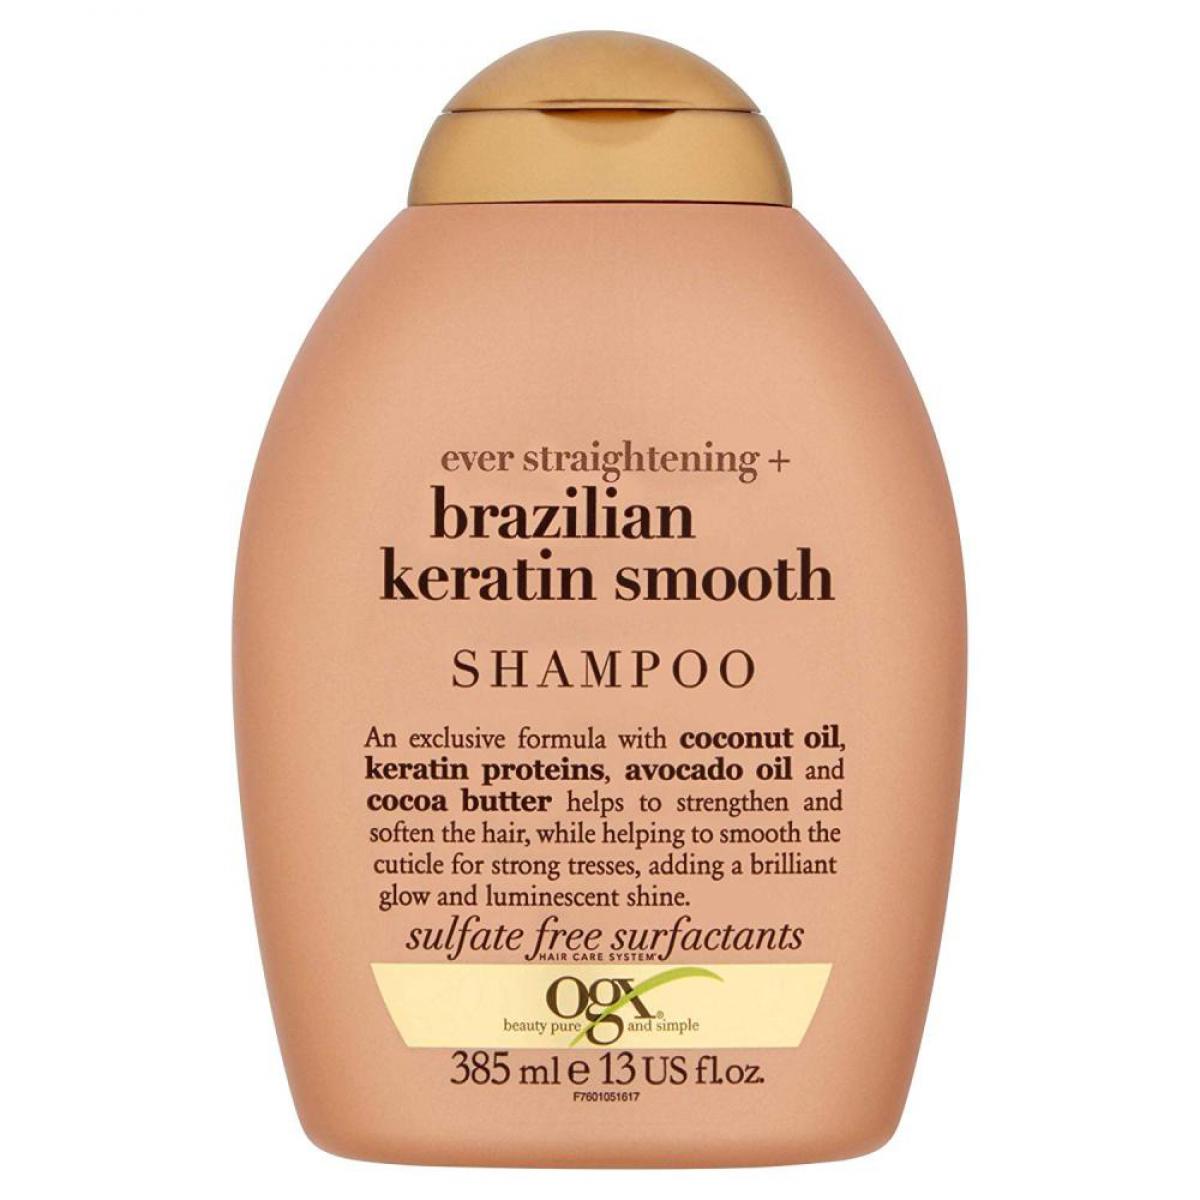 شامپو کراتین برزیلی بدون سولفات، صاف کننده قوی مو  - Ever Straightening + Brazilian Keratin Smooth Shampoo 385 ml